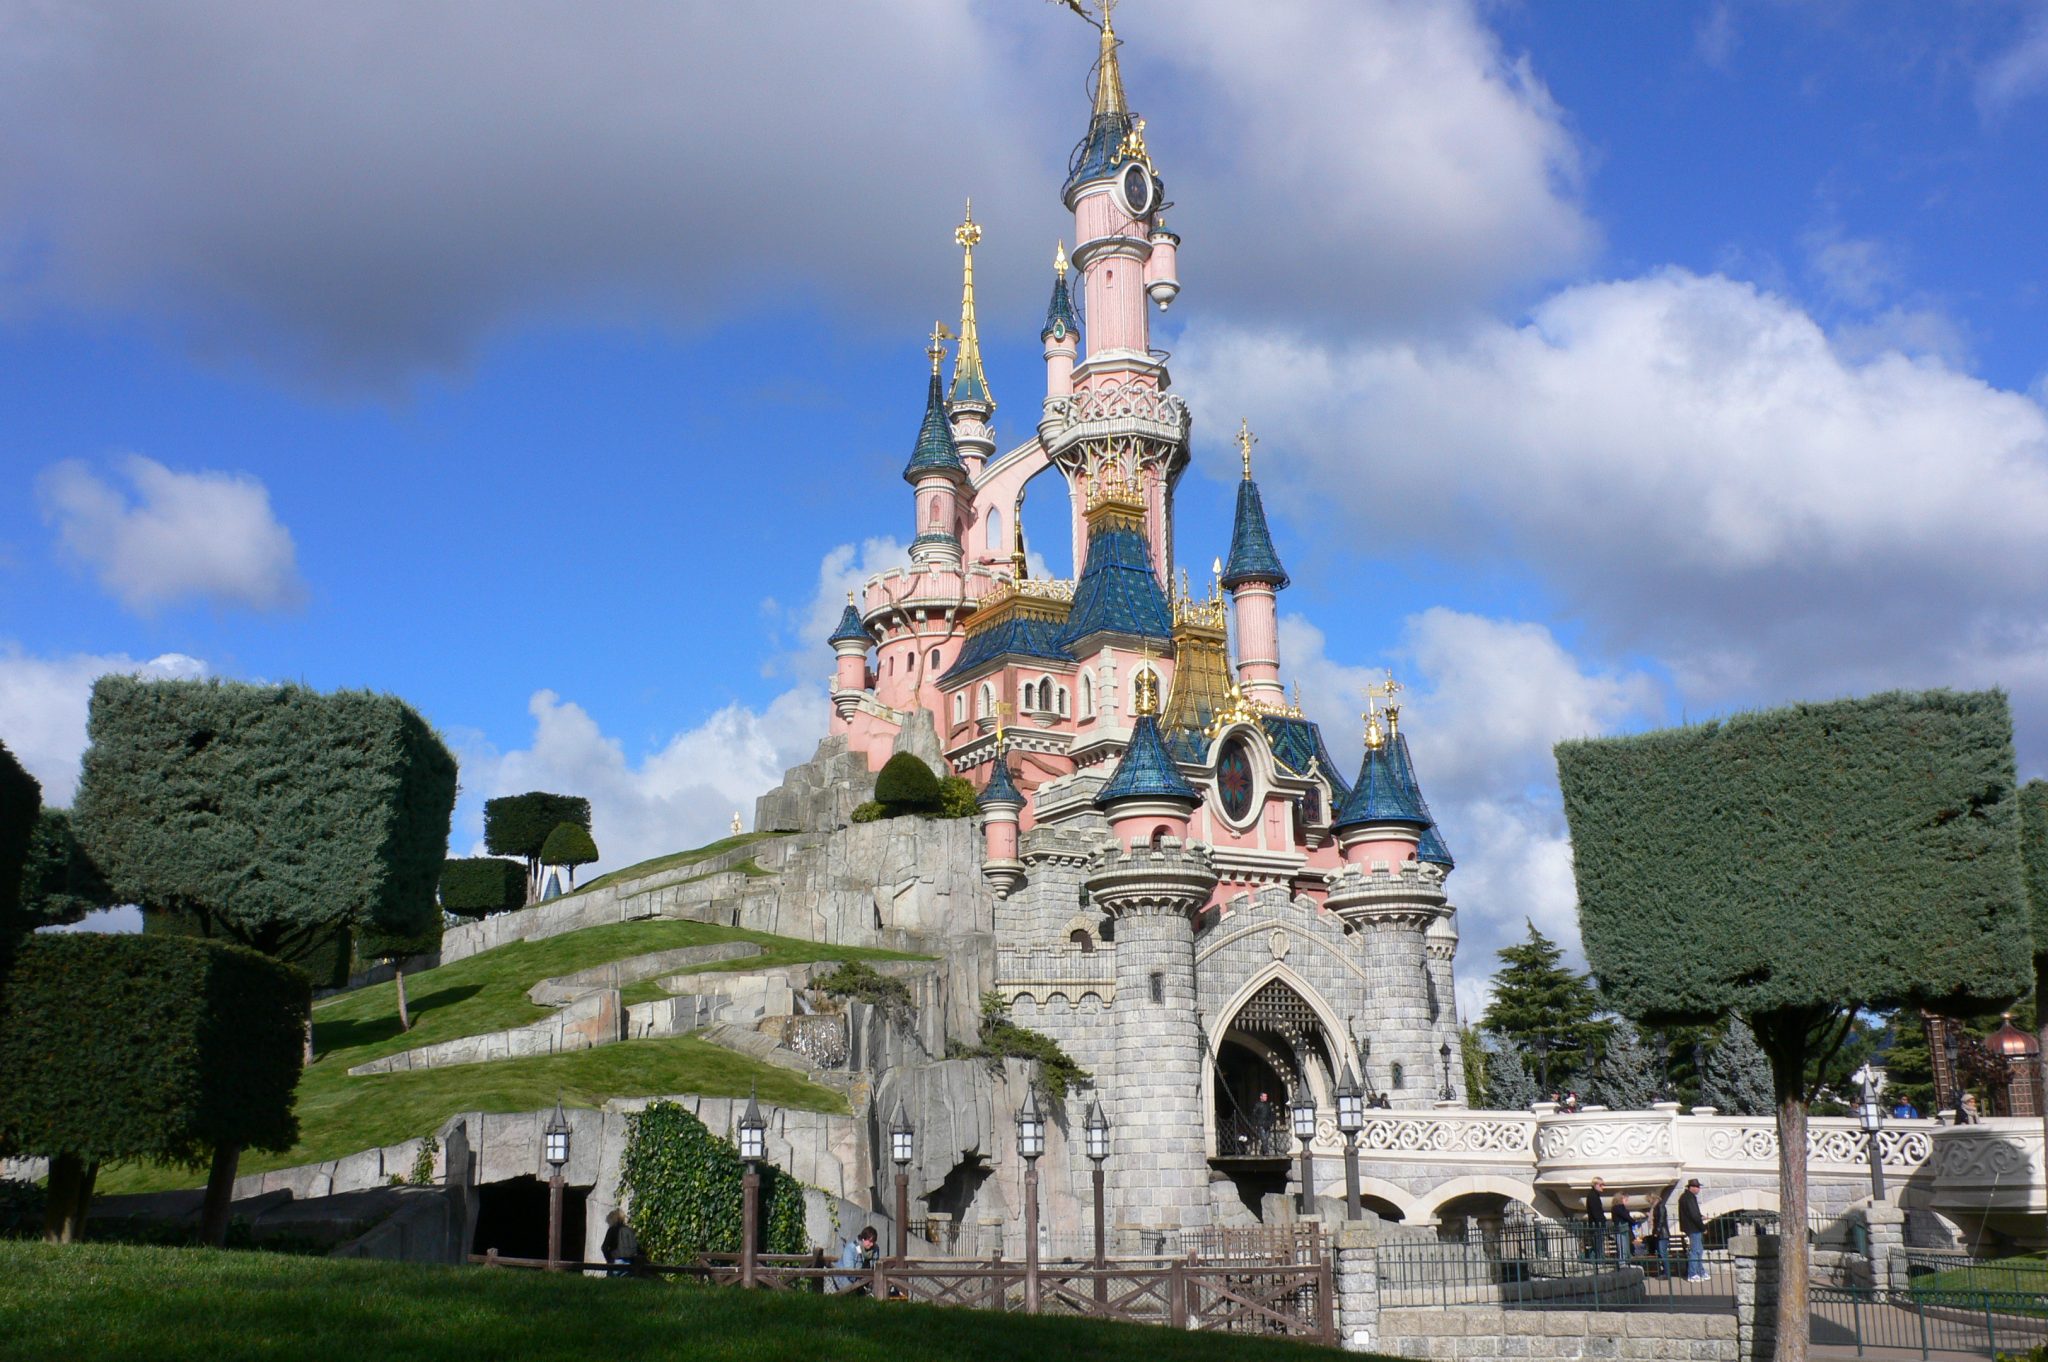 Disneyland Paris to Remain Closed Through November 17th